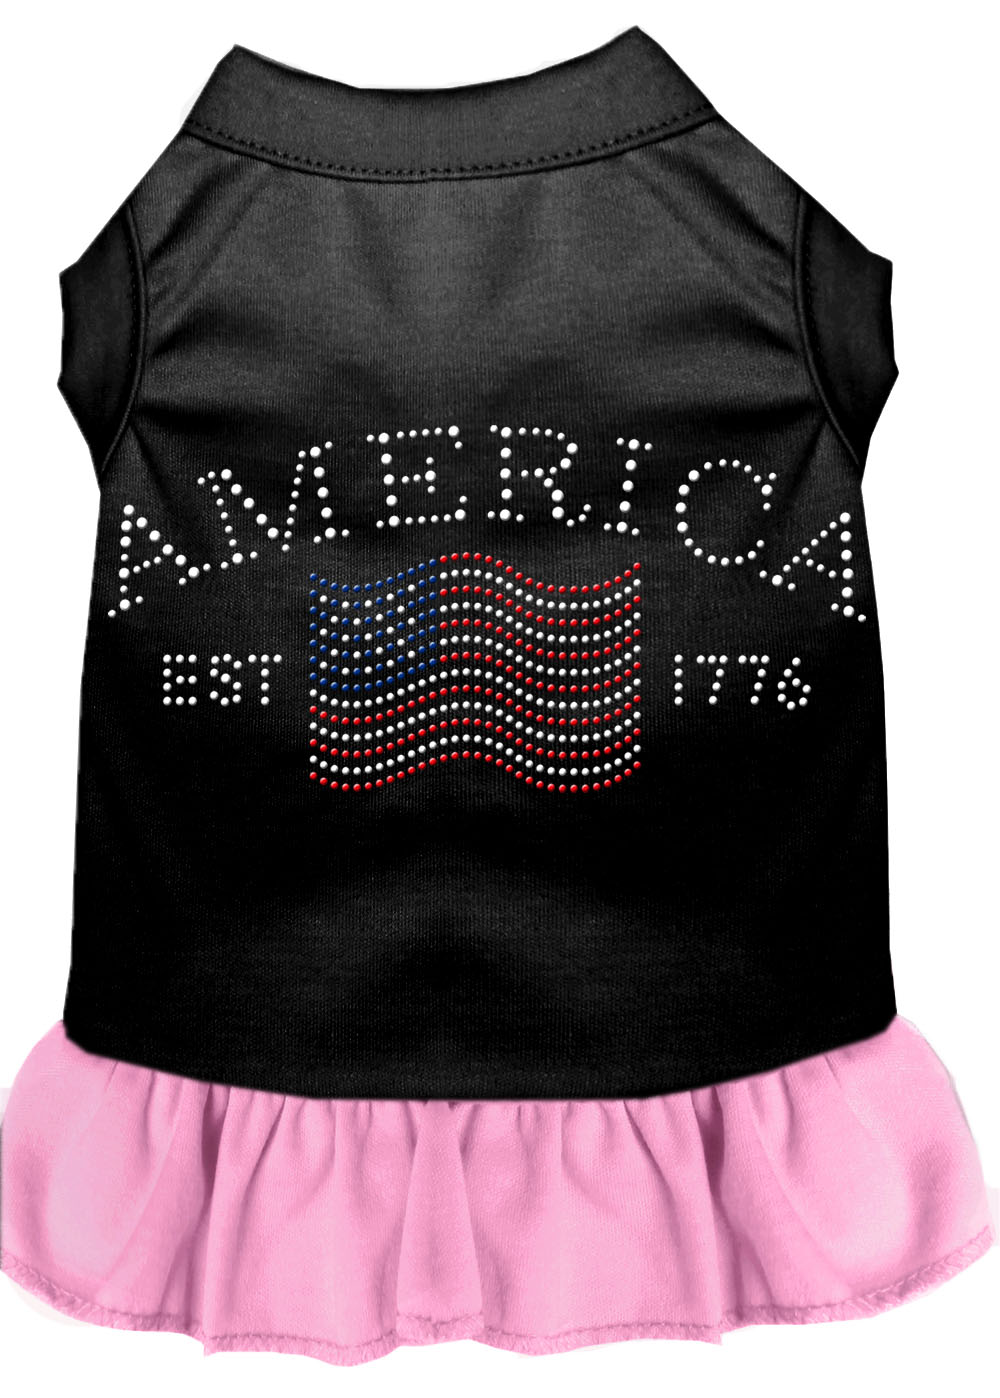 Classic America Rhinestone Dress Black with Light Pink Sm